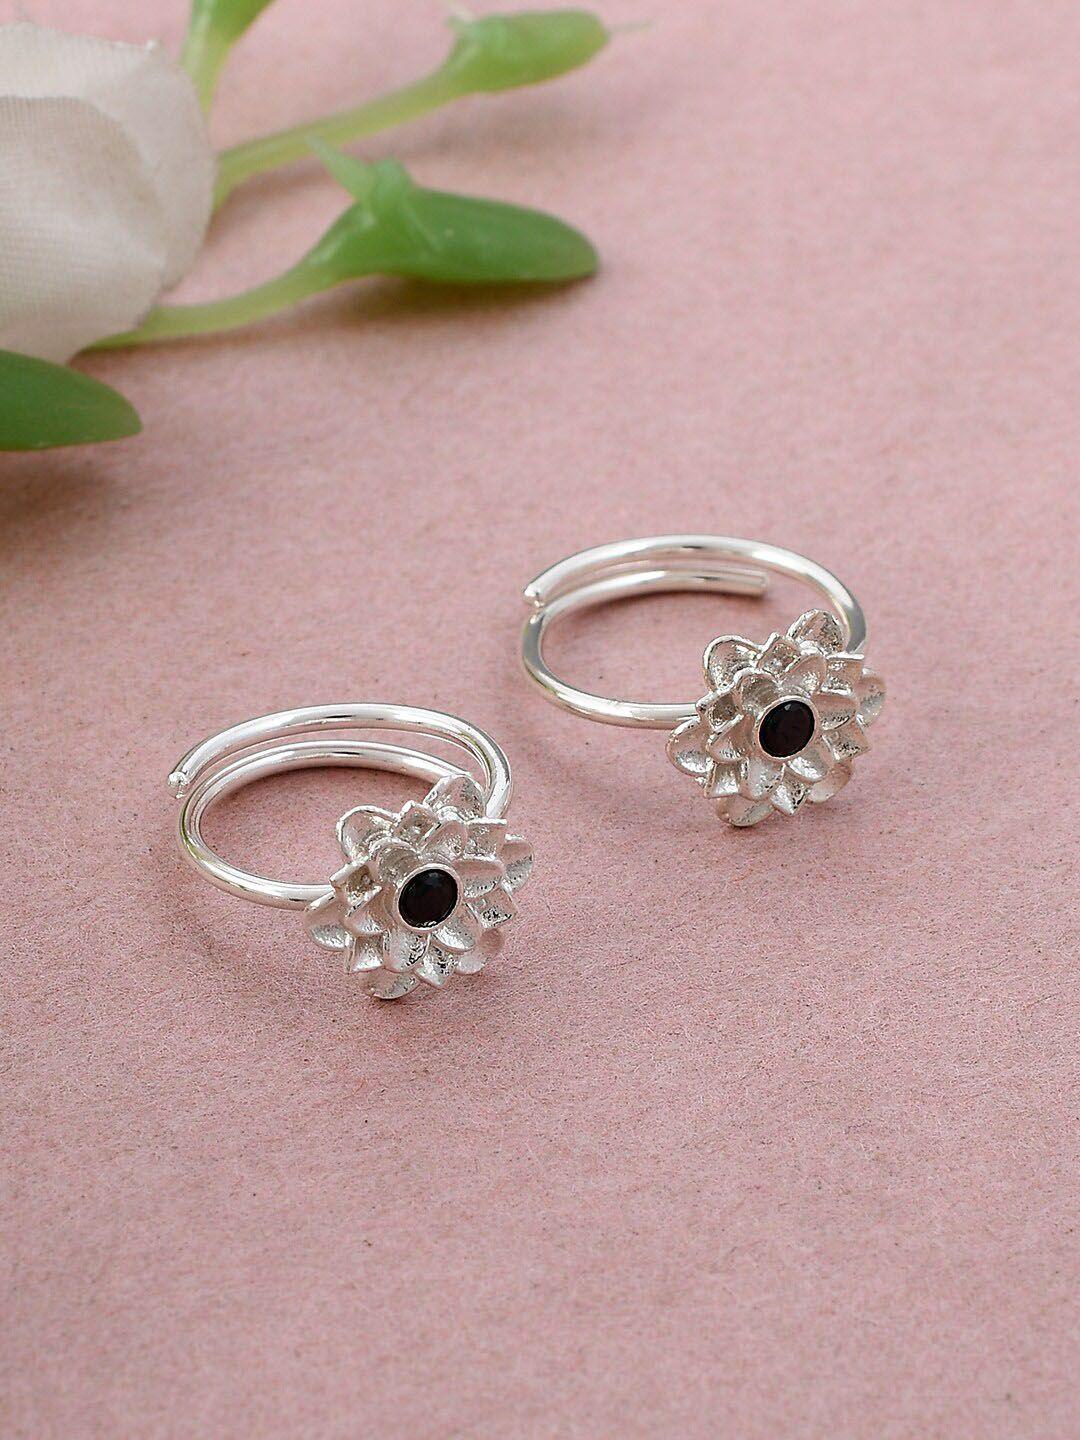 silvermerc designs set of 2 silver-plated & black quartz-studded adjustable toe rings